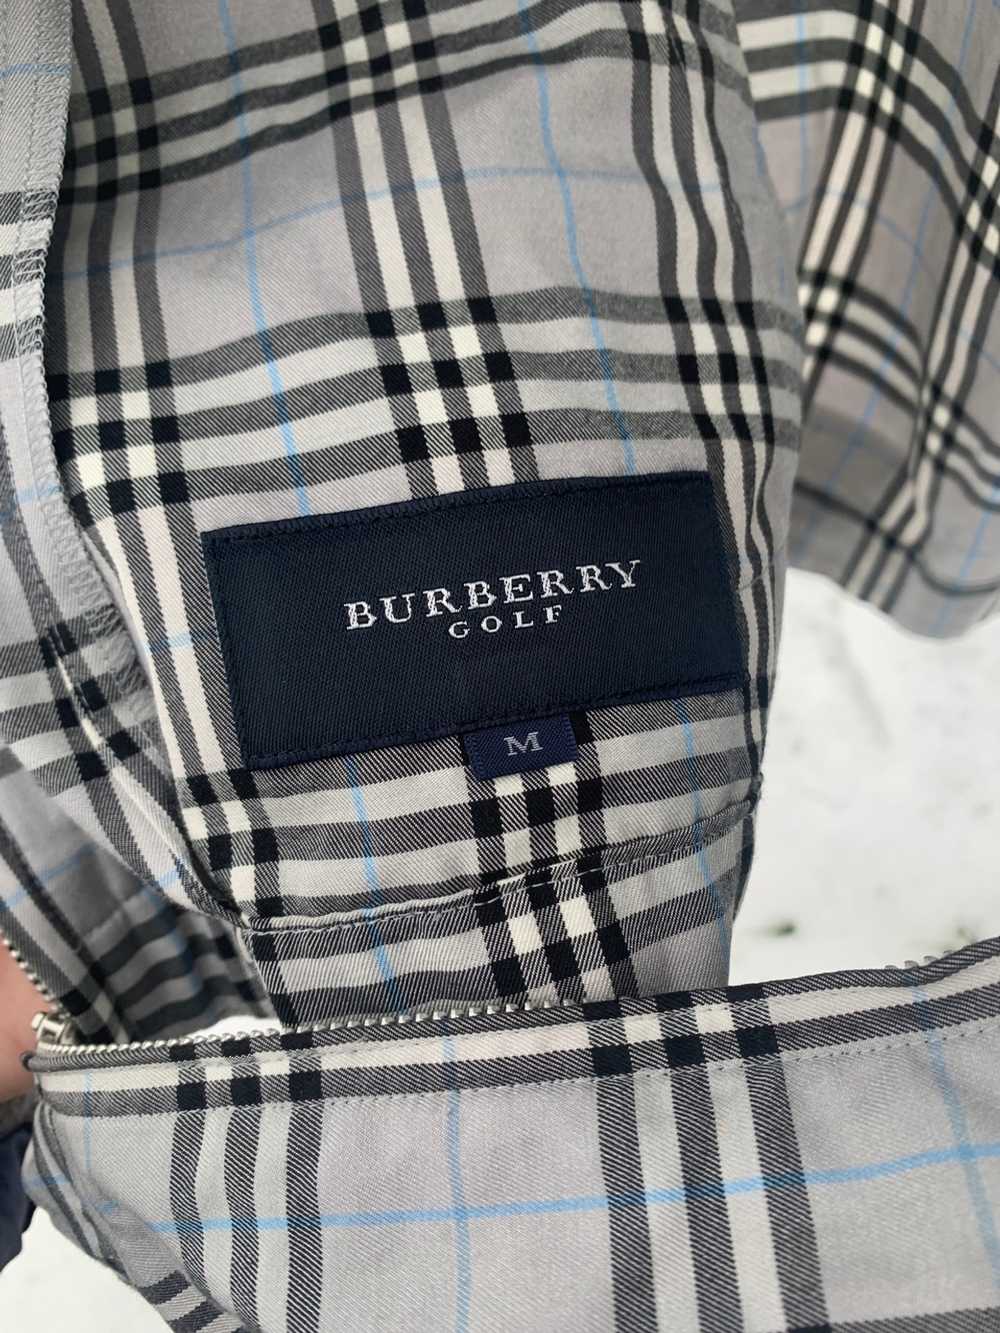 Burberry Burberry Golf Zipper Vest Jacket - image 5